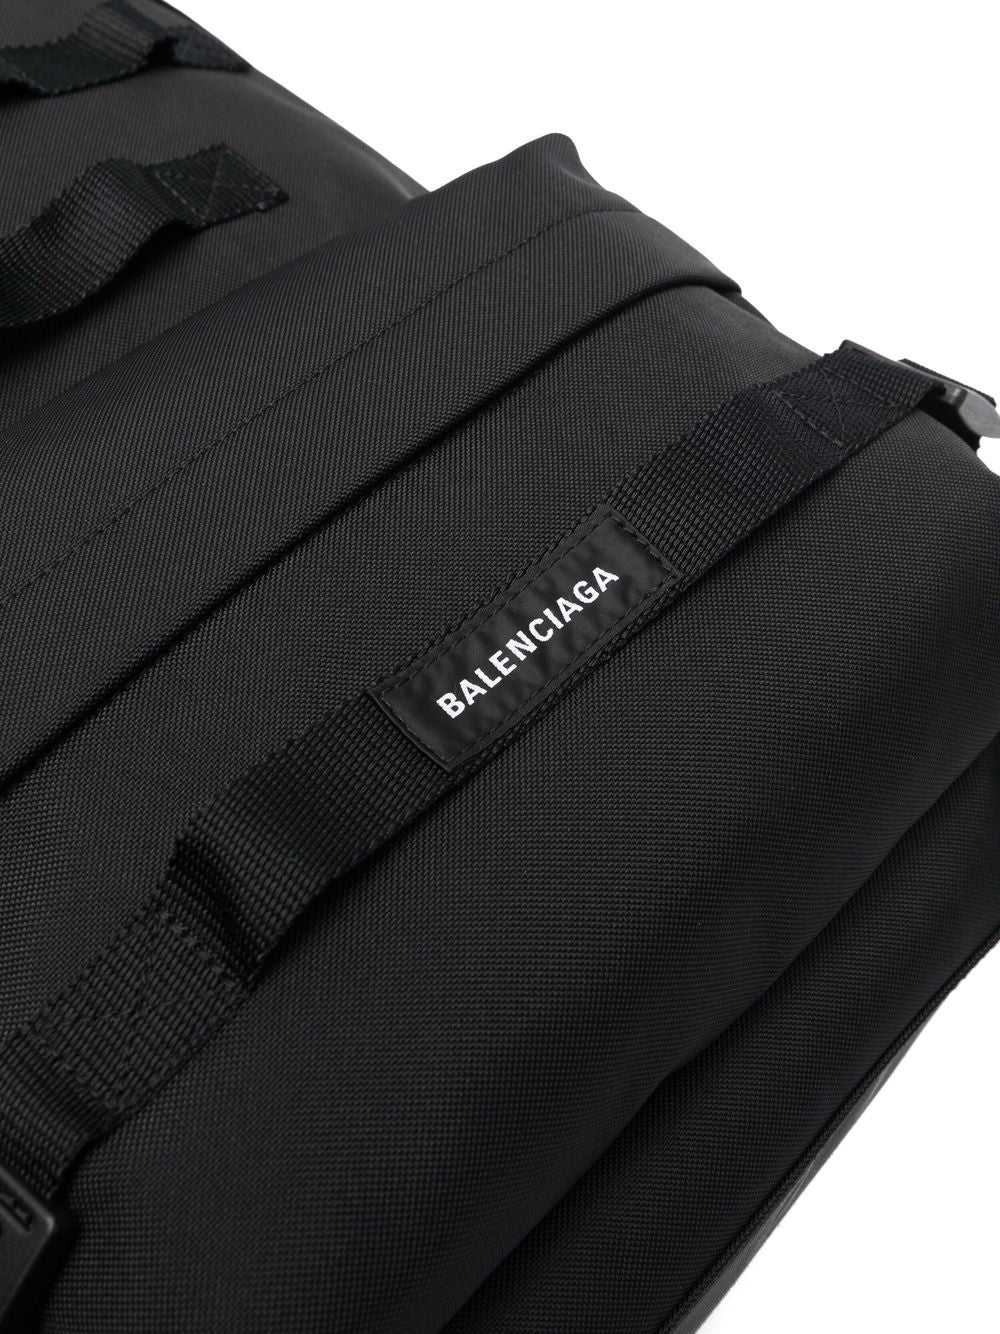 BALENCIAGA Black Eco-Conscious Medium Nylon Backpack with Adjustable Straps